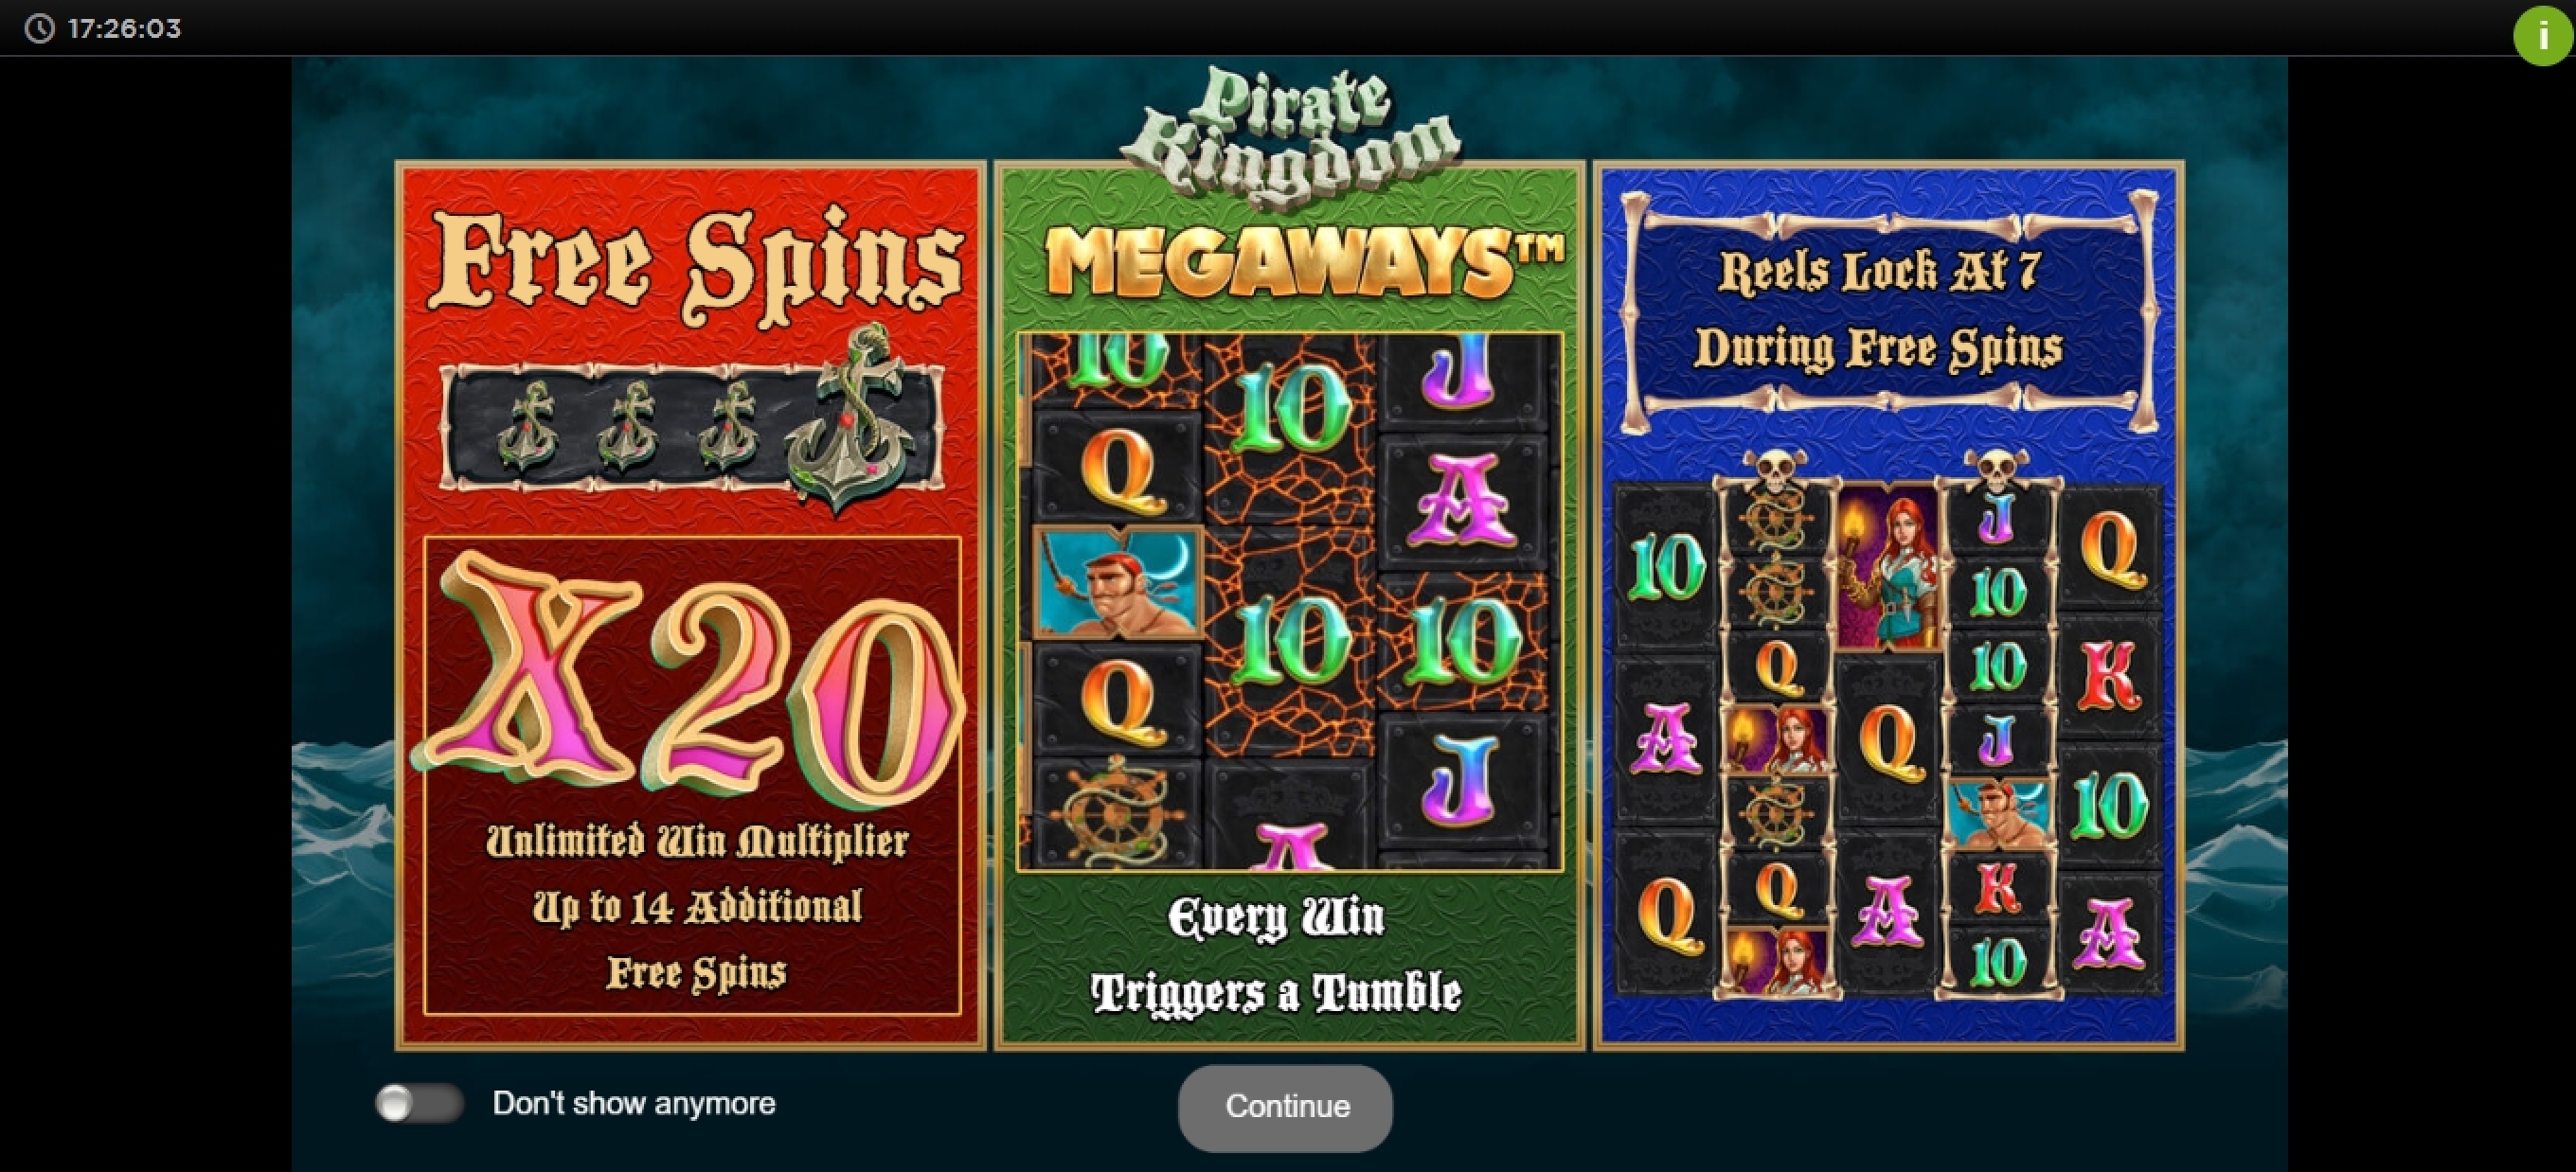 Play Pirate Kingdom Megaways Free Casino Slot Game by Iron Dog Studios